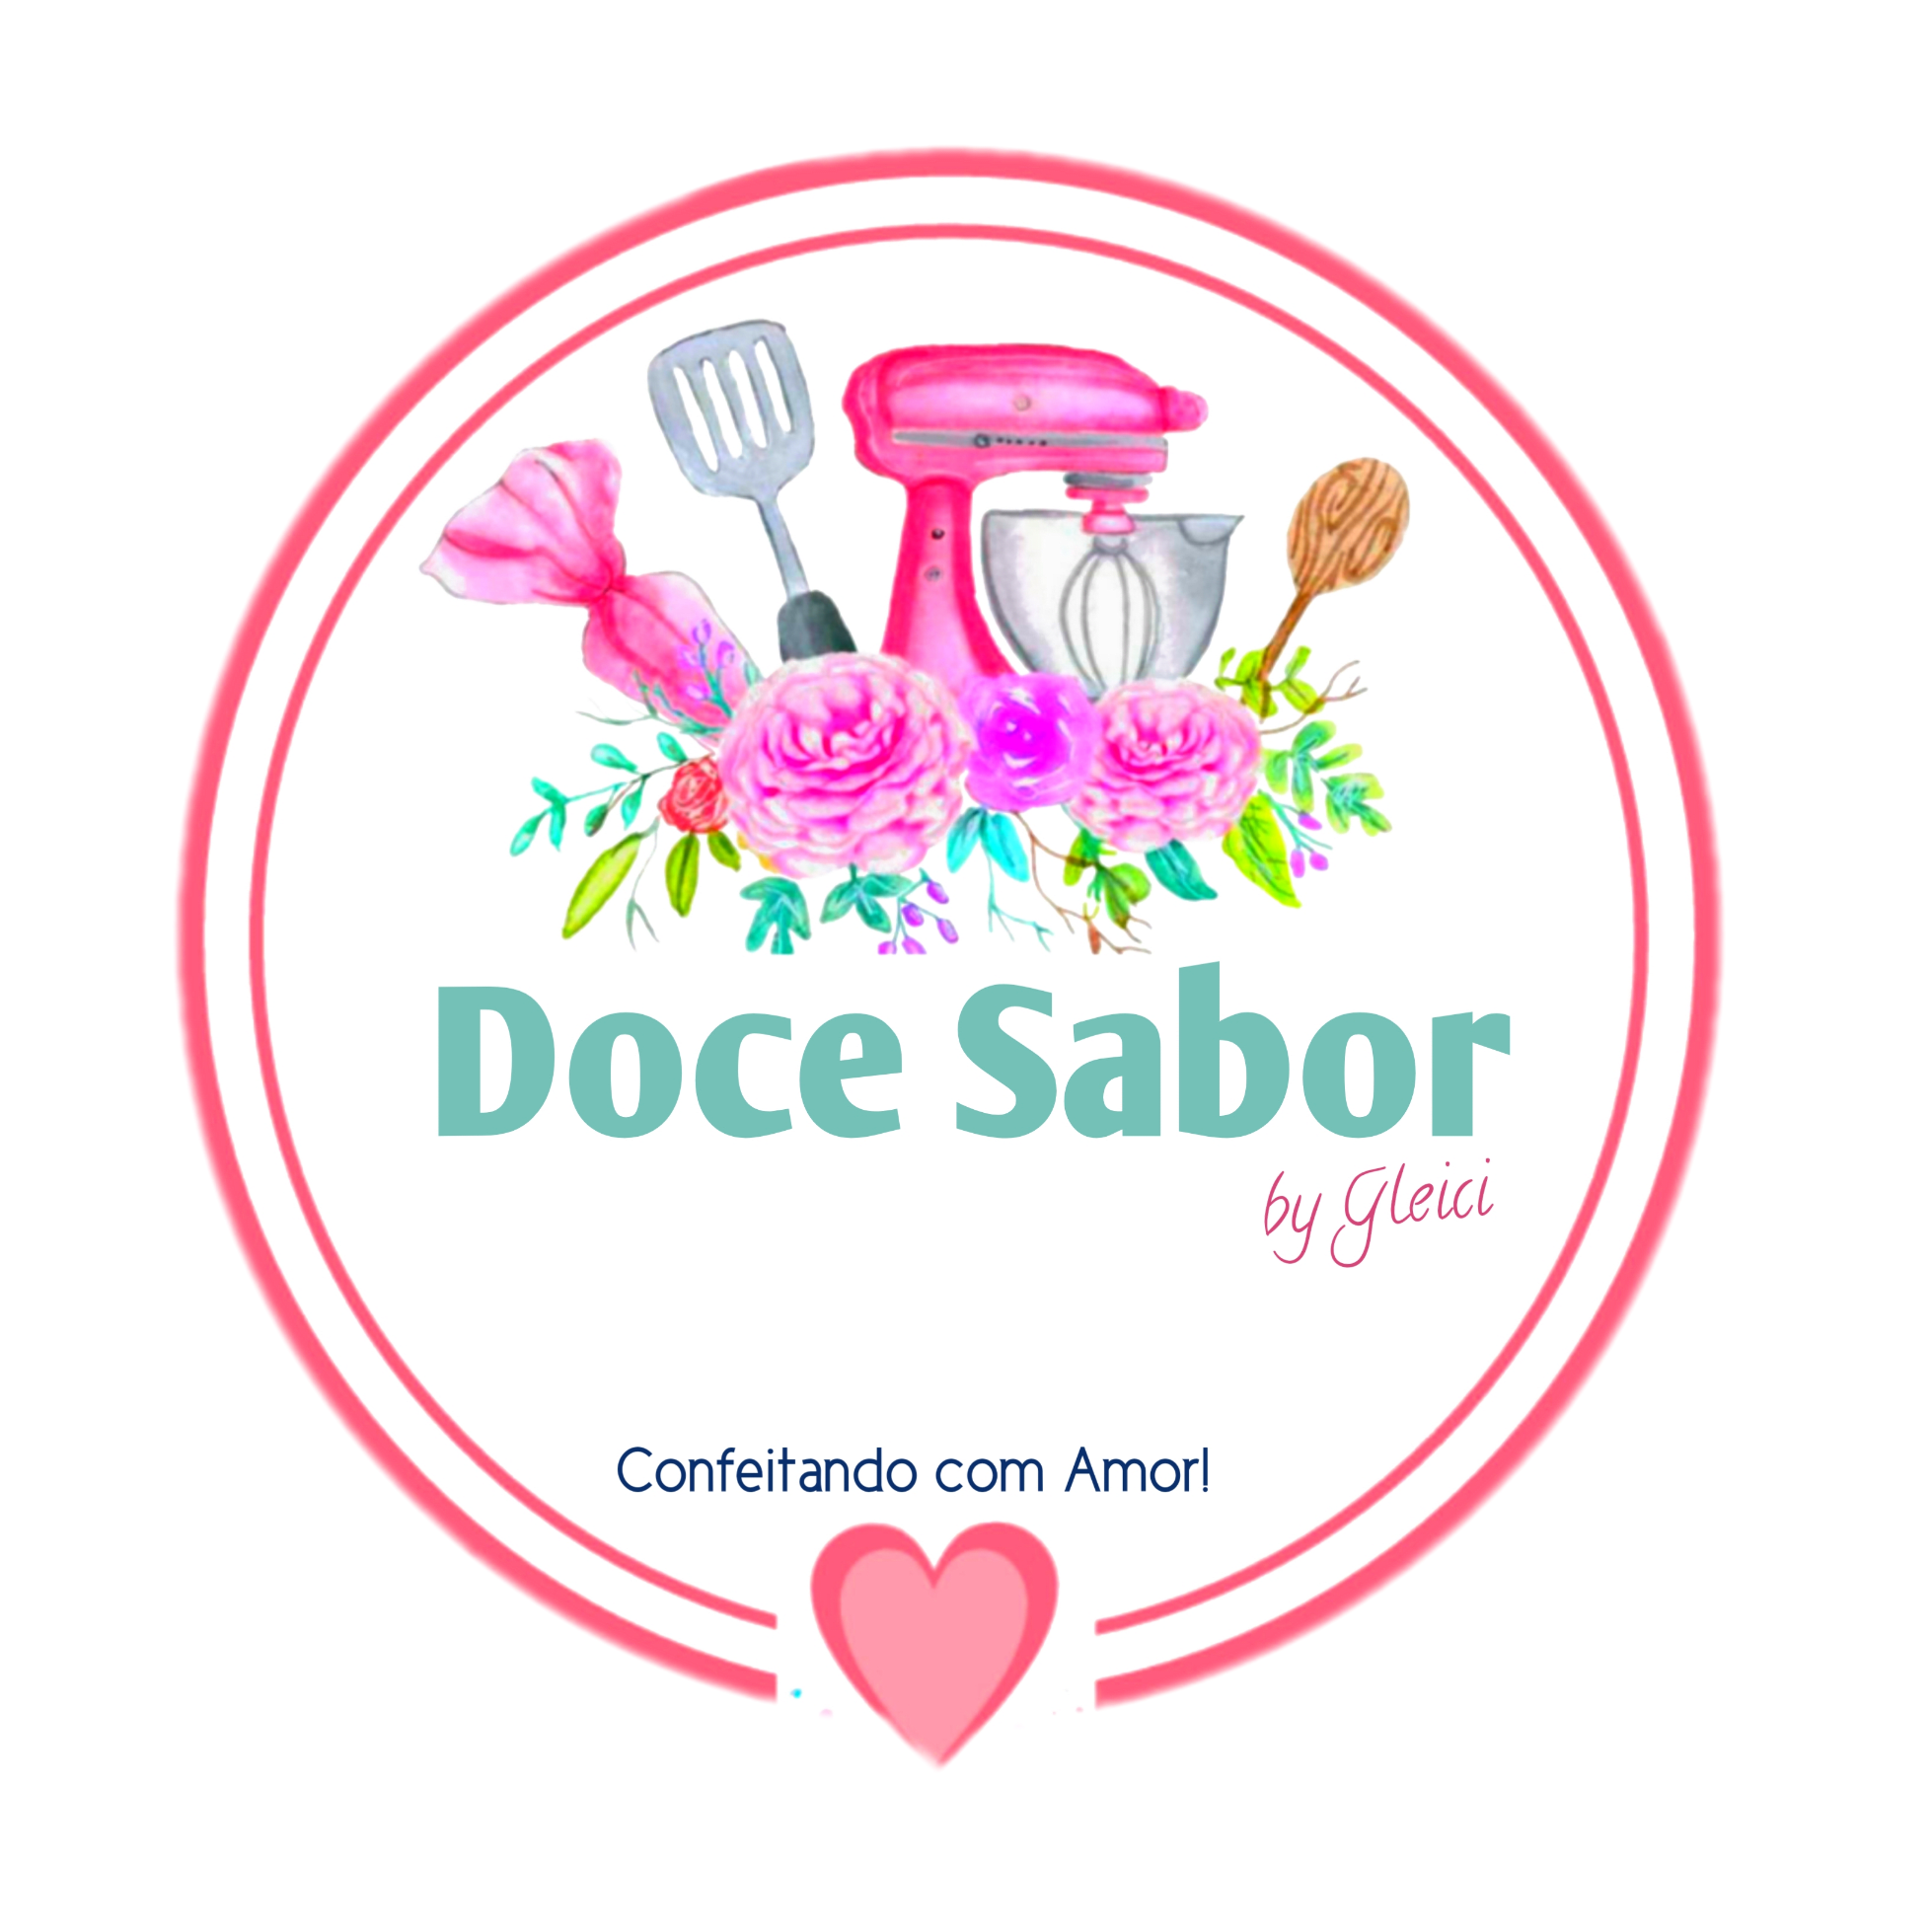 Doce Sabor By Gleici